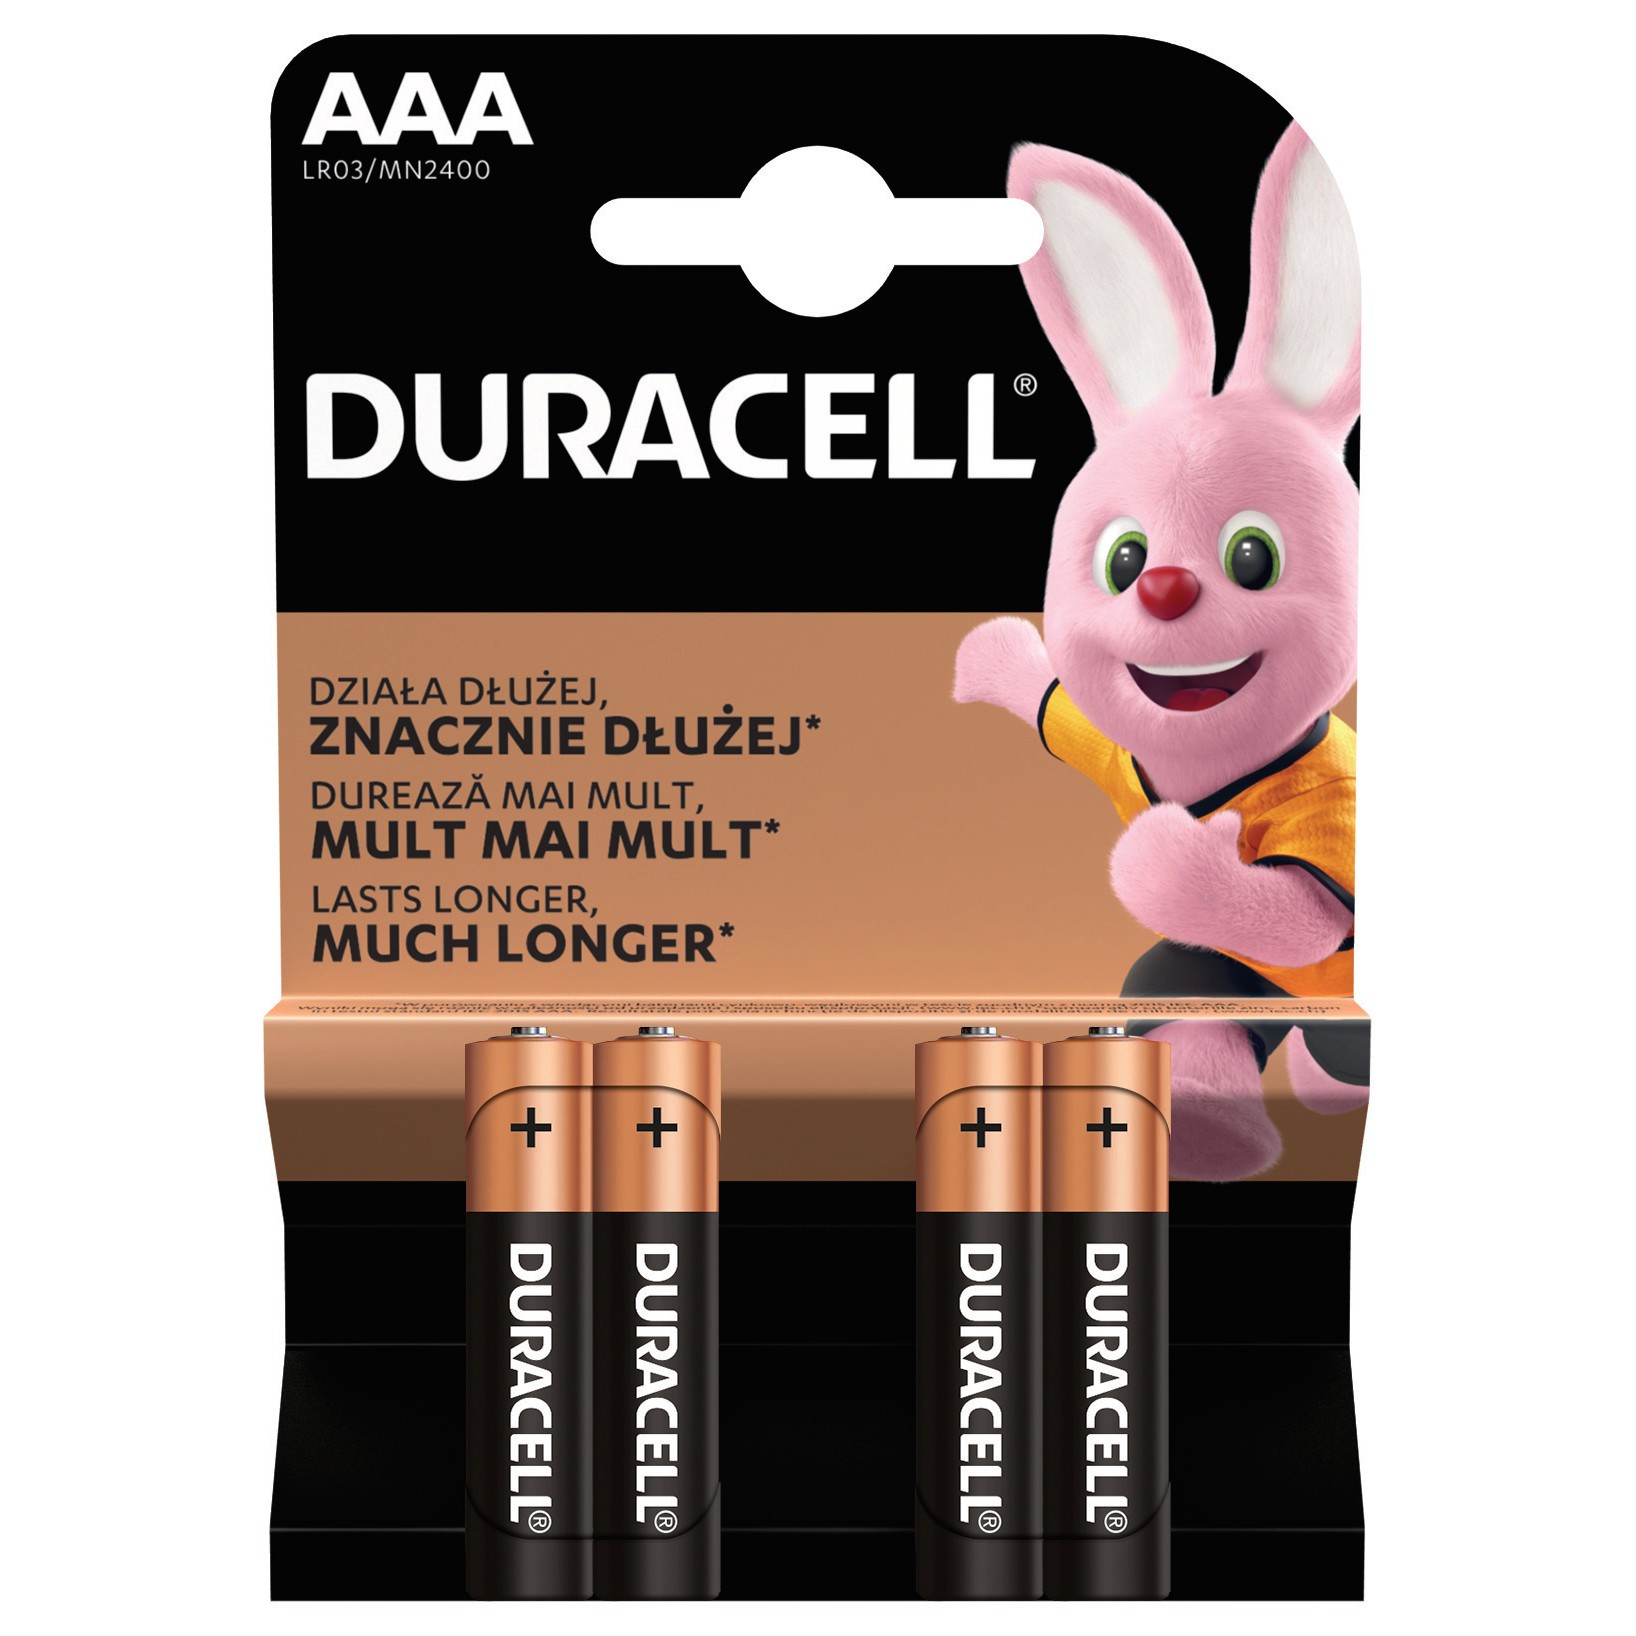 Baterii, acumulatori,incarcatoare - DURACELL BATERII BASIC ALK. AAA 4BUC/SET 10SET/BAX, lucidiusmarket.ro